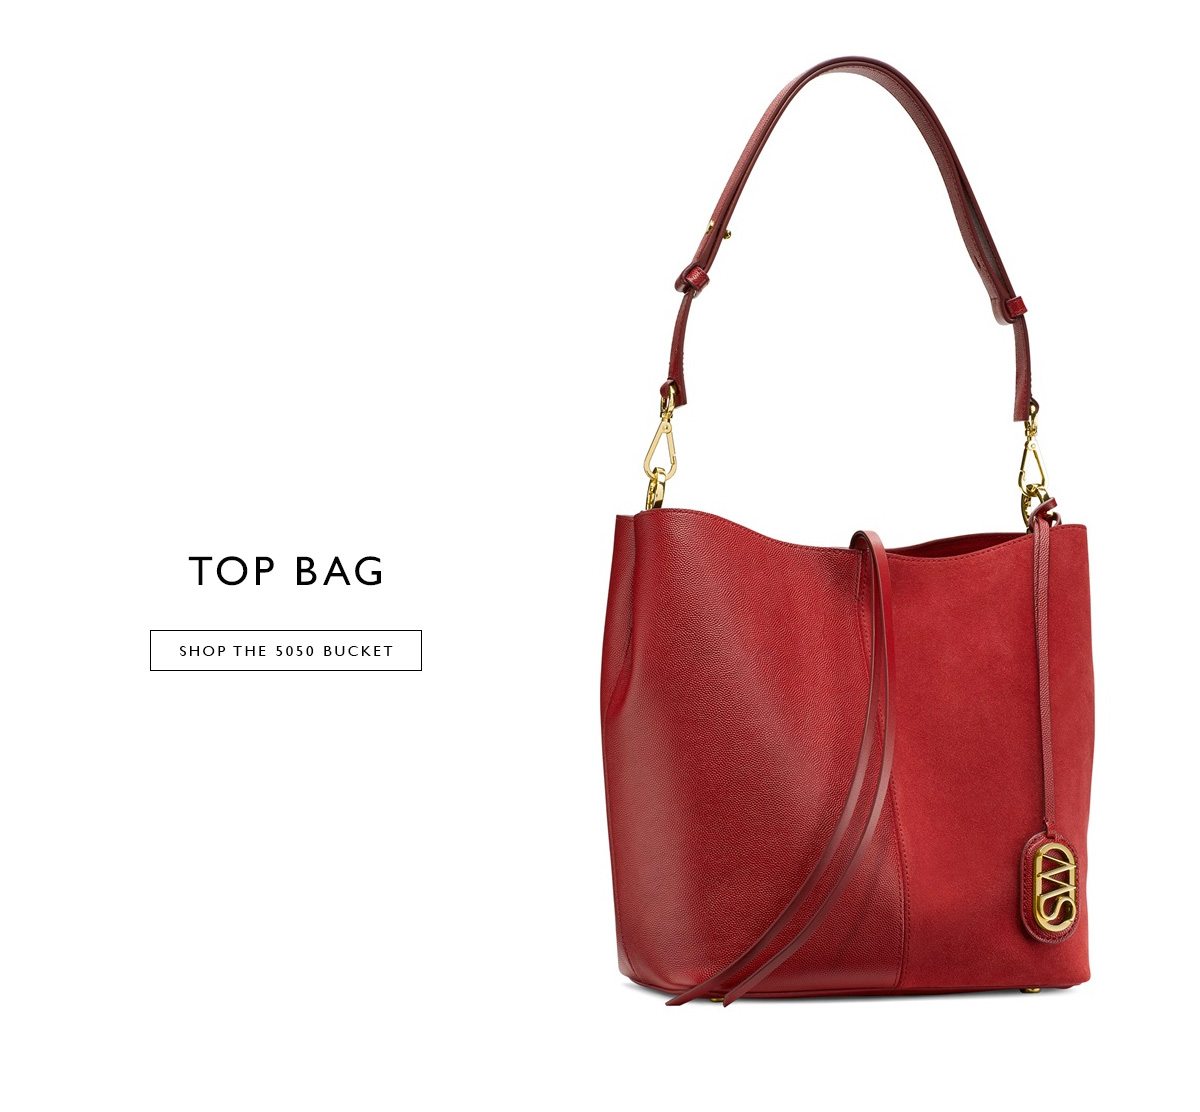 Top Bag. Shop The 5050 Bucket